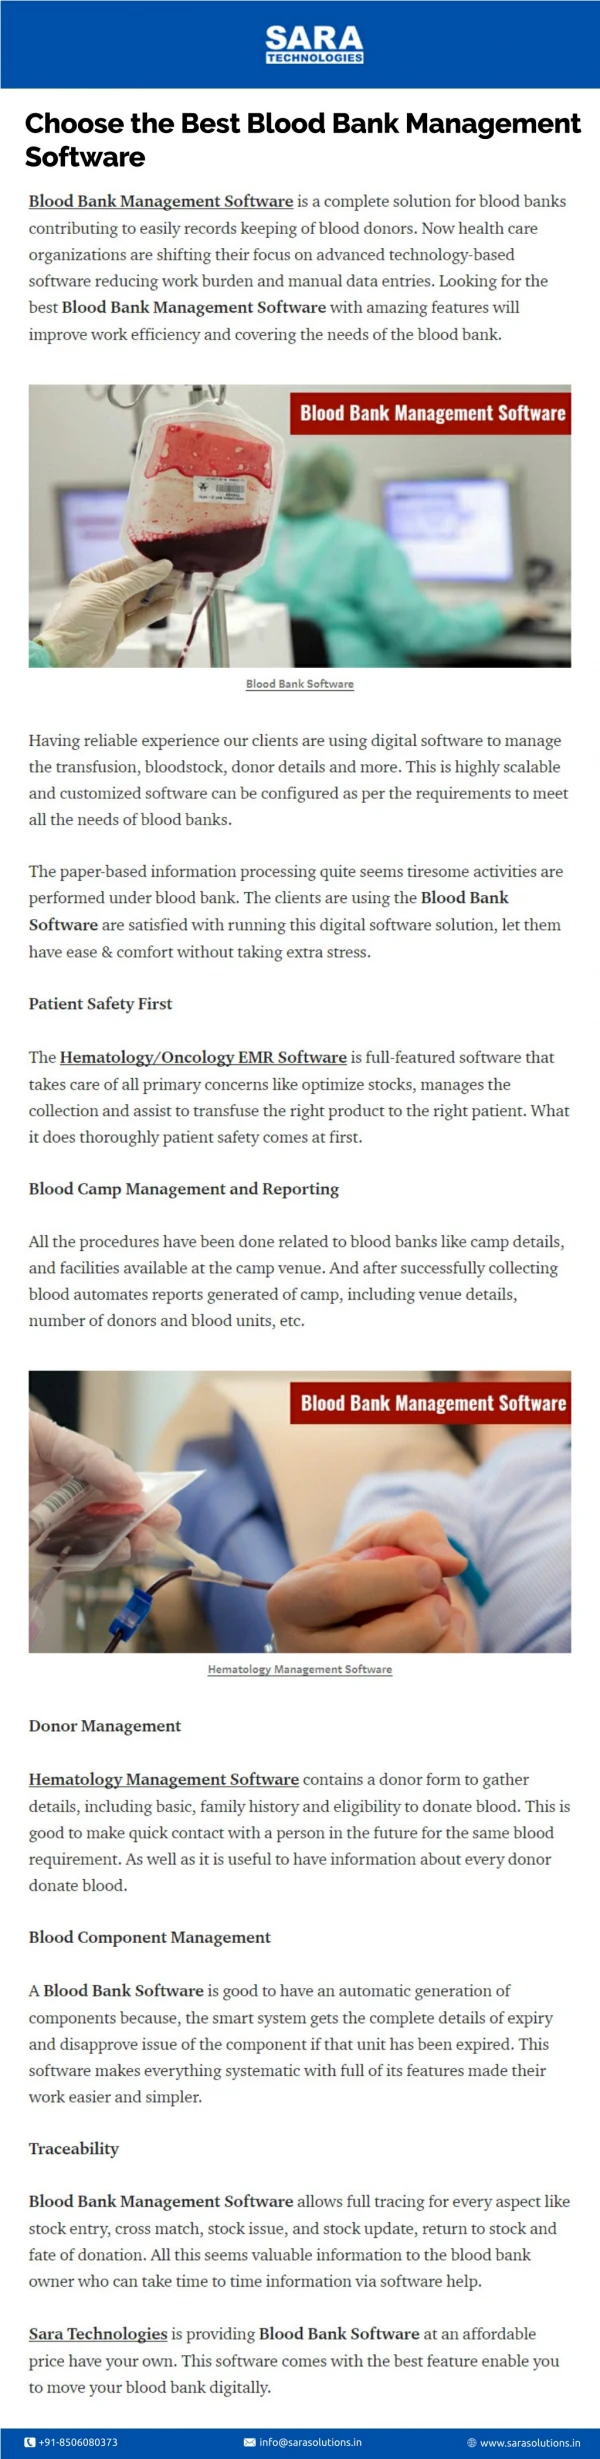 Choose the Best Blood Bank Management Software